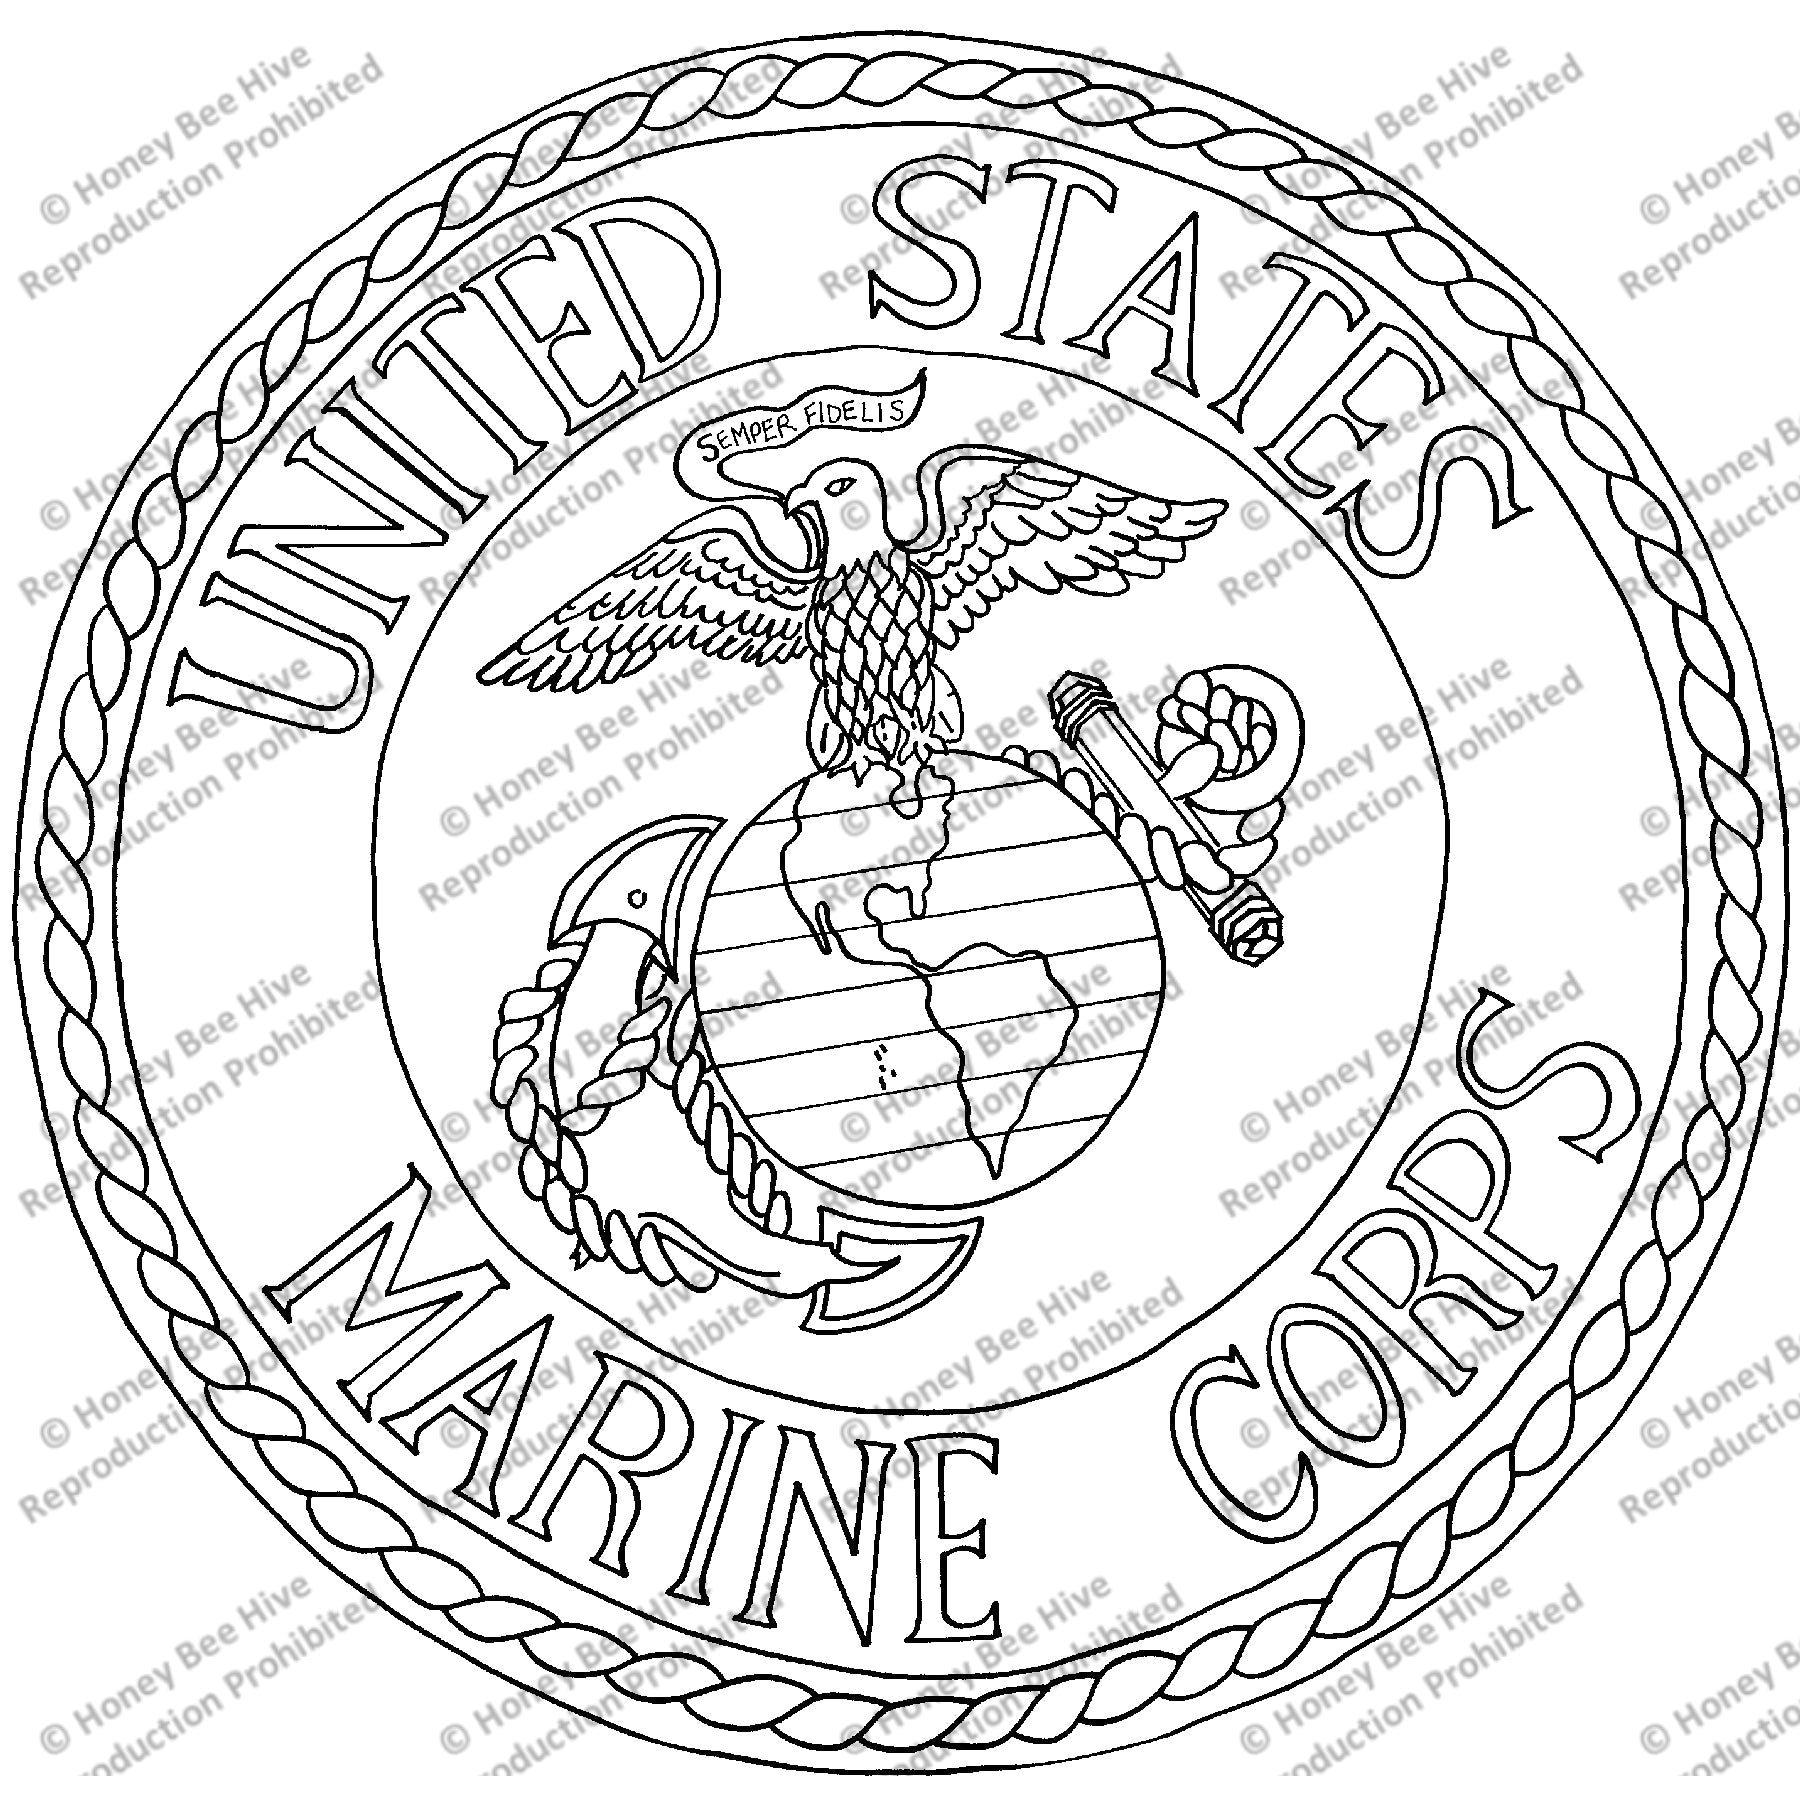 U.S. Marine Corps Insignia, rug hooking pattern